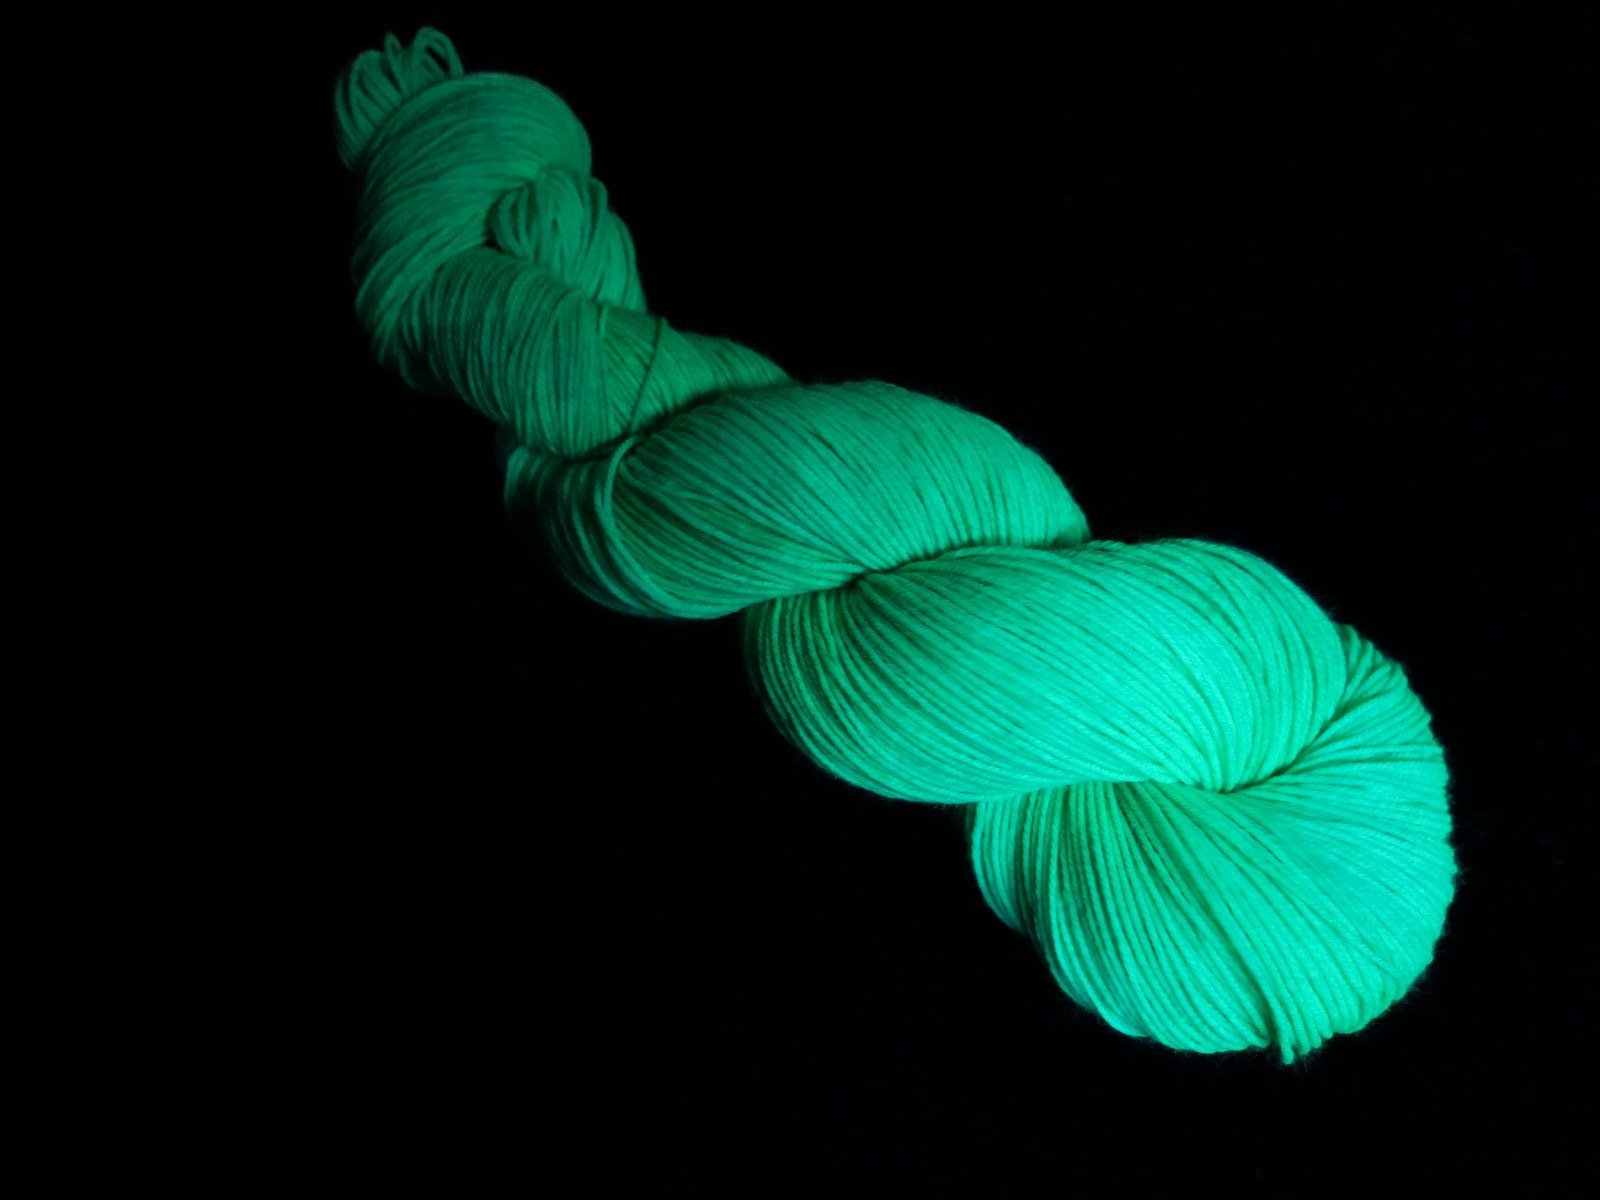 hand dyed green yarn fluorescing under uv black light